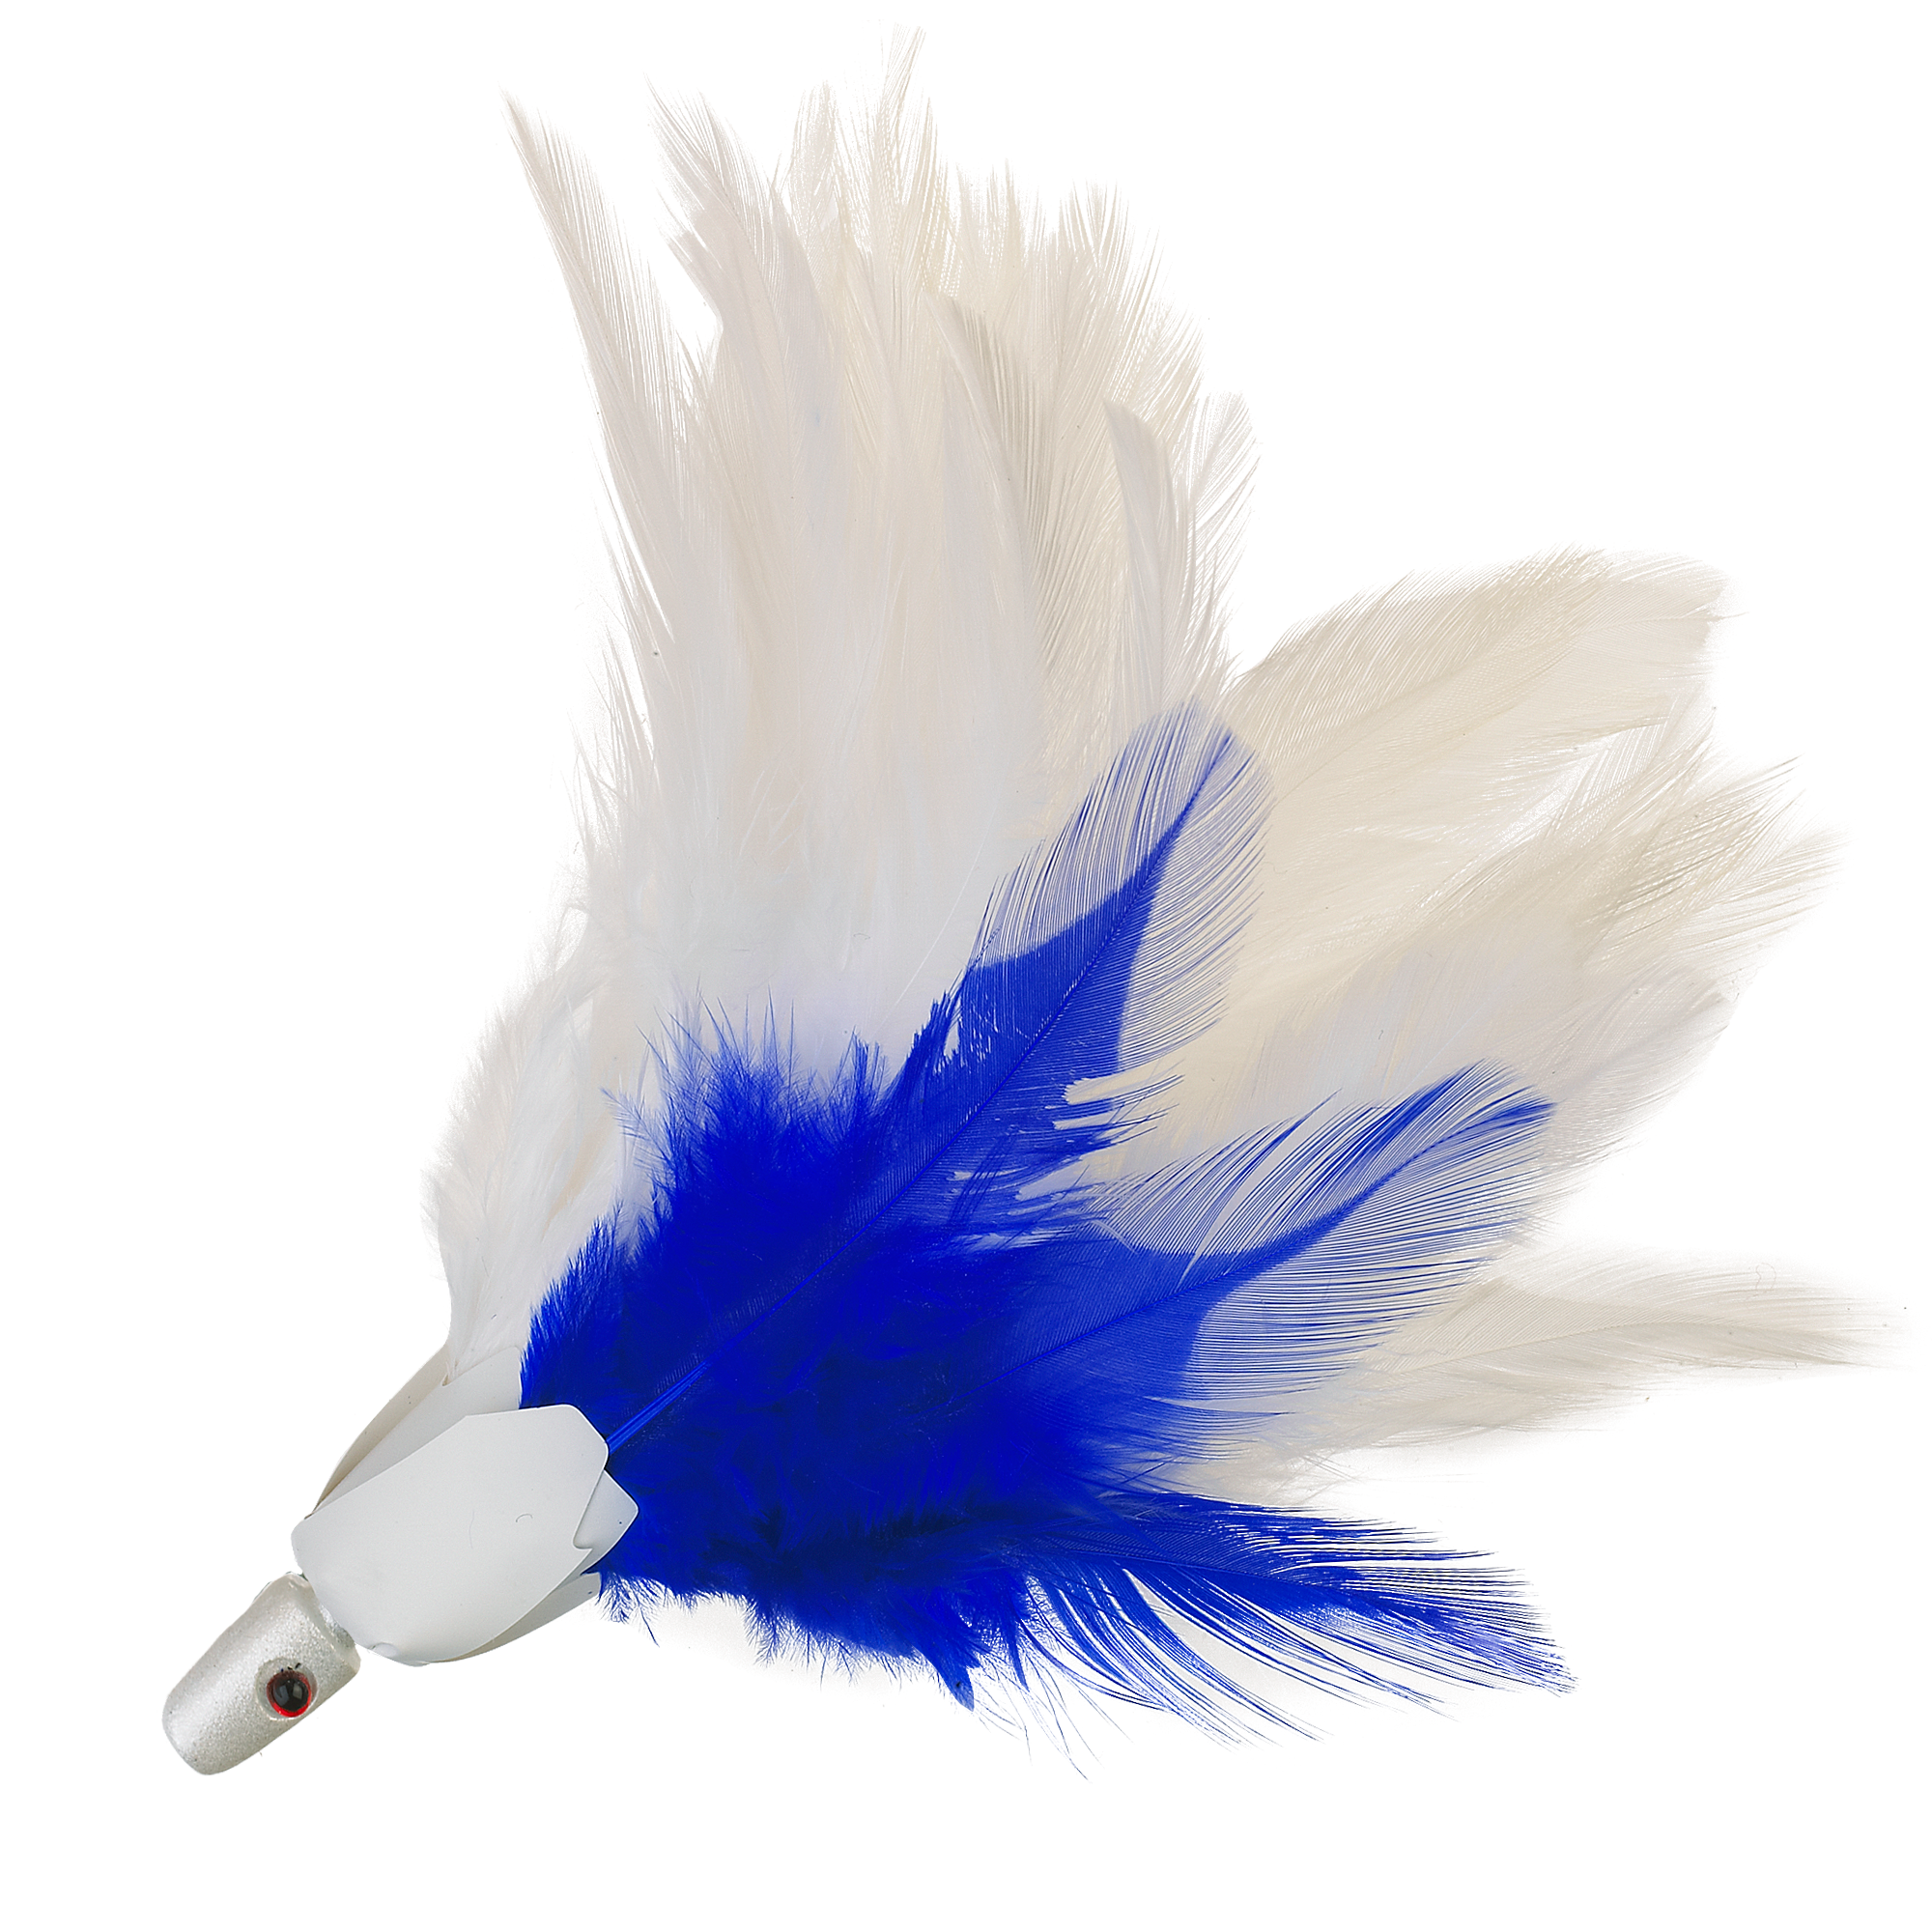 No-Alibi Trolling Feathers - Unrigged - 1/2 oz - Blue/White